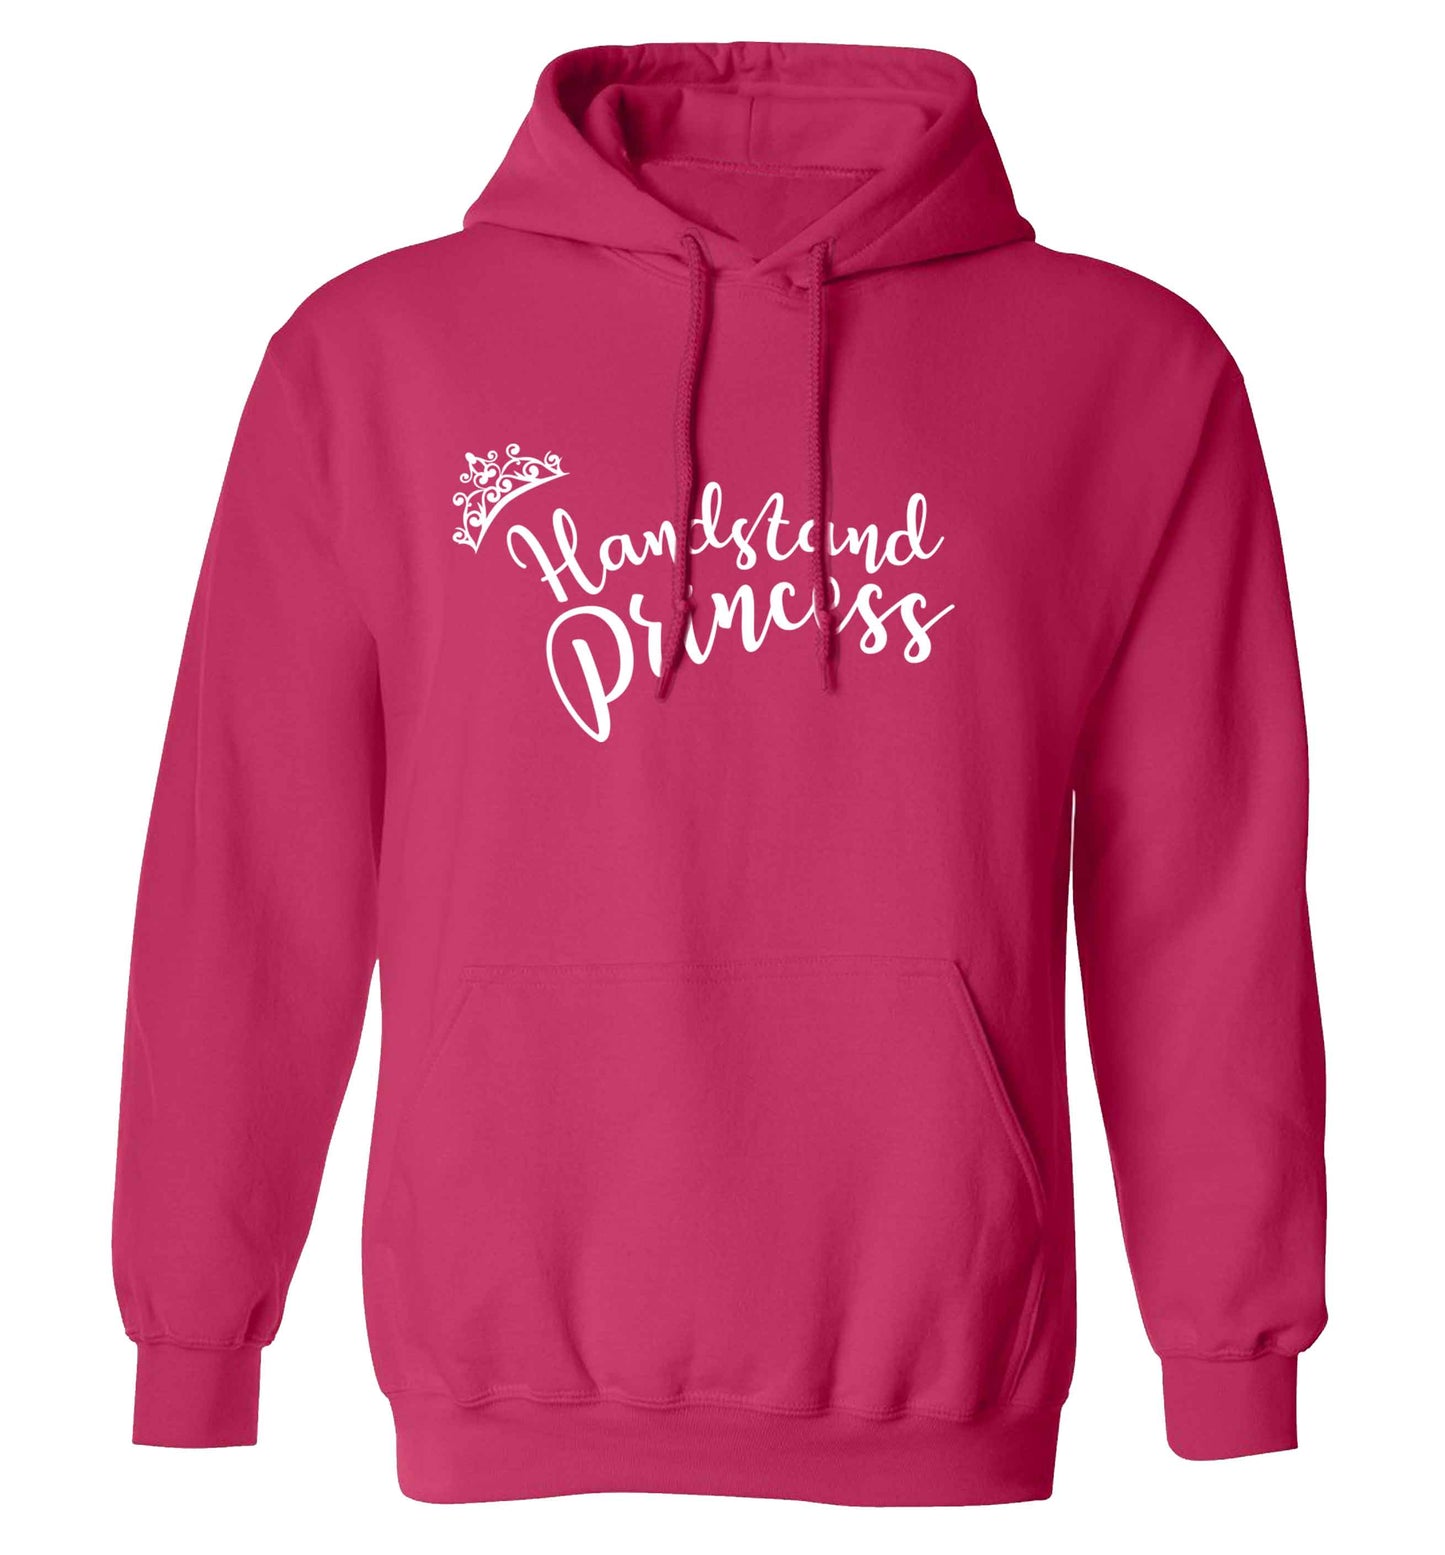 Handstand princess adults unisex pink hoodie 2XL